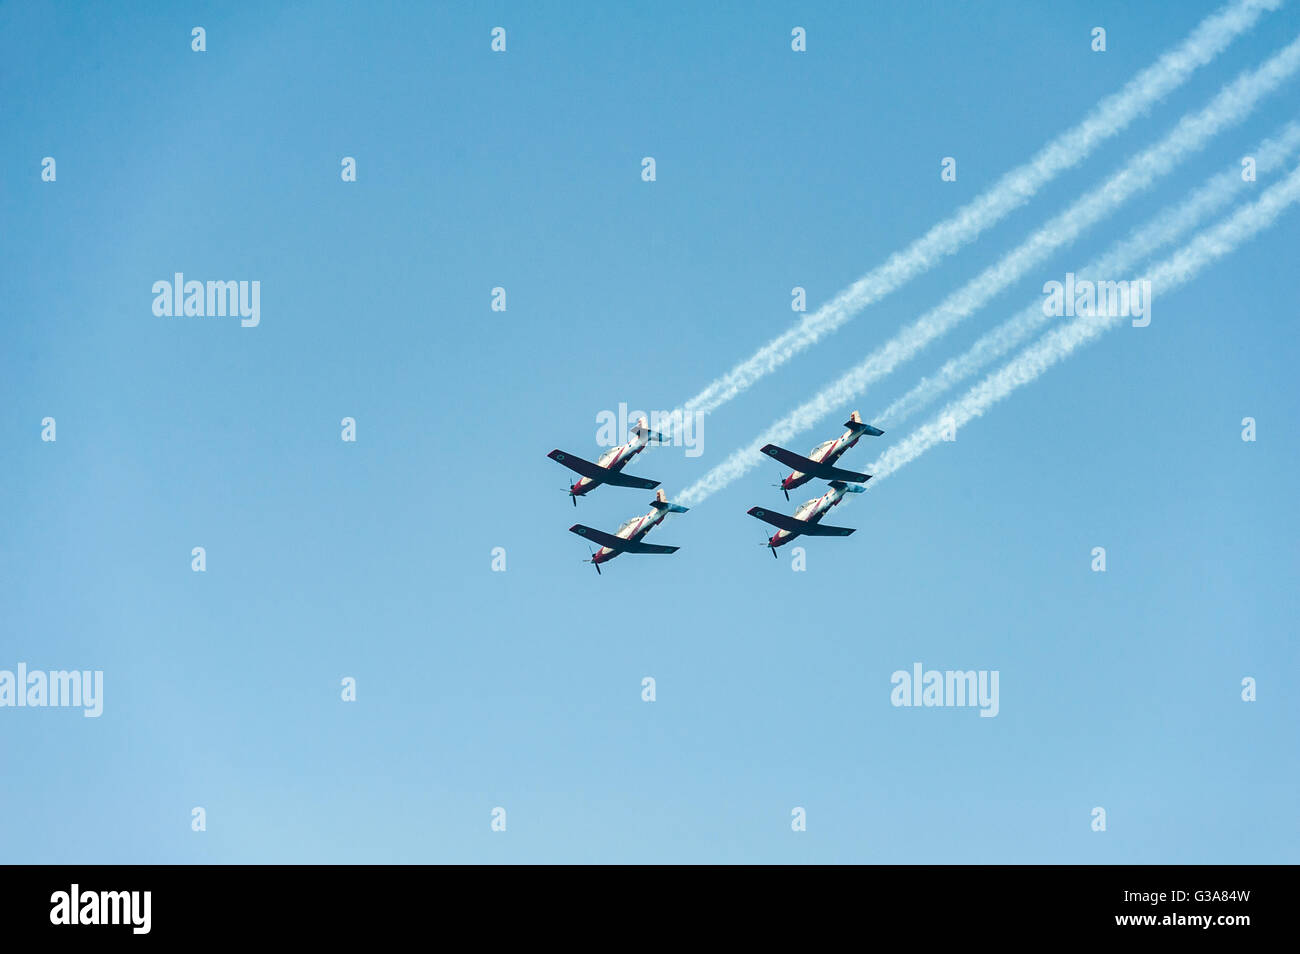 Israel, Tel Aviv - Jaffa, traditionellen Airshow oberhalb der Stadt am Independence Day - Yom haatsmatout Stockfoto